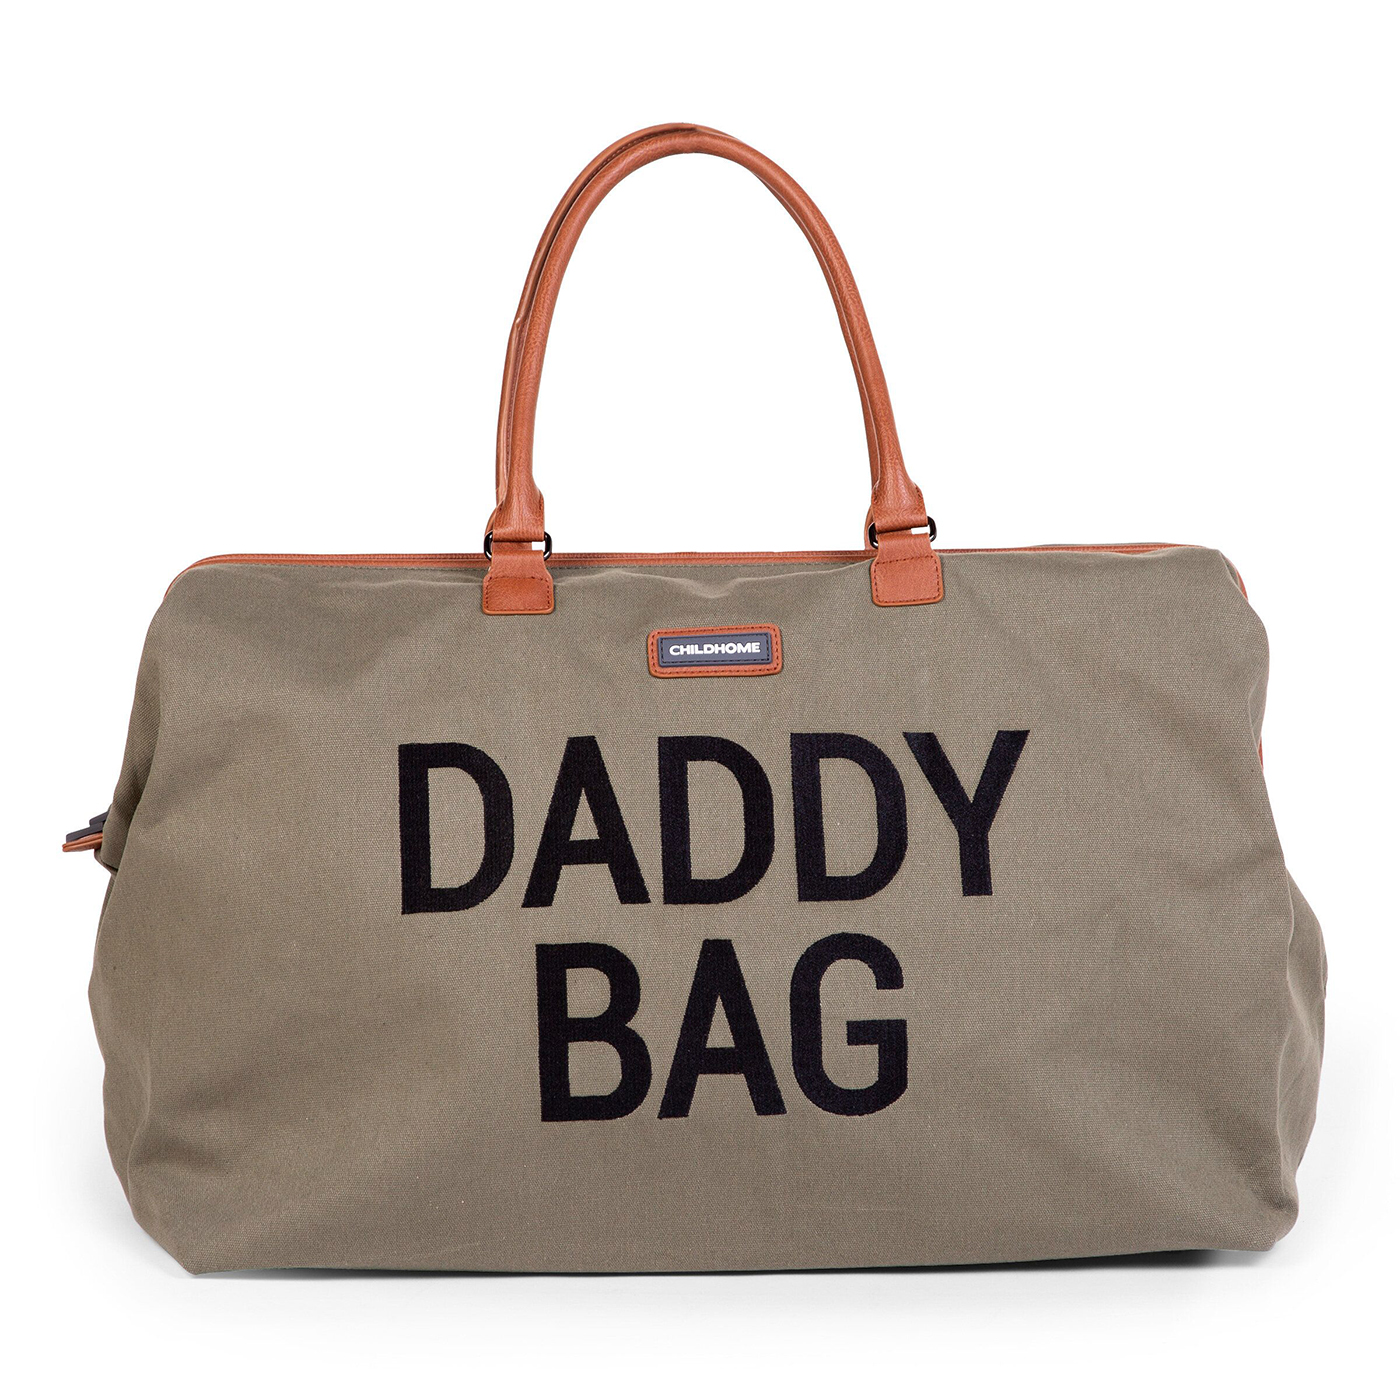  Childhome Daddy Bag  | Haki